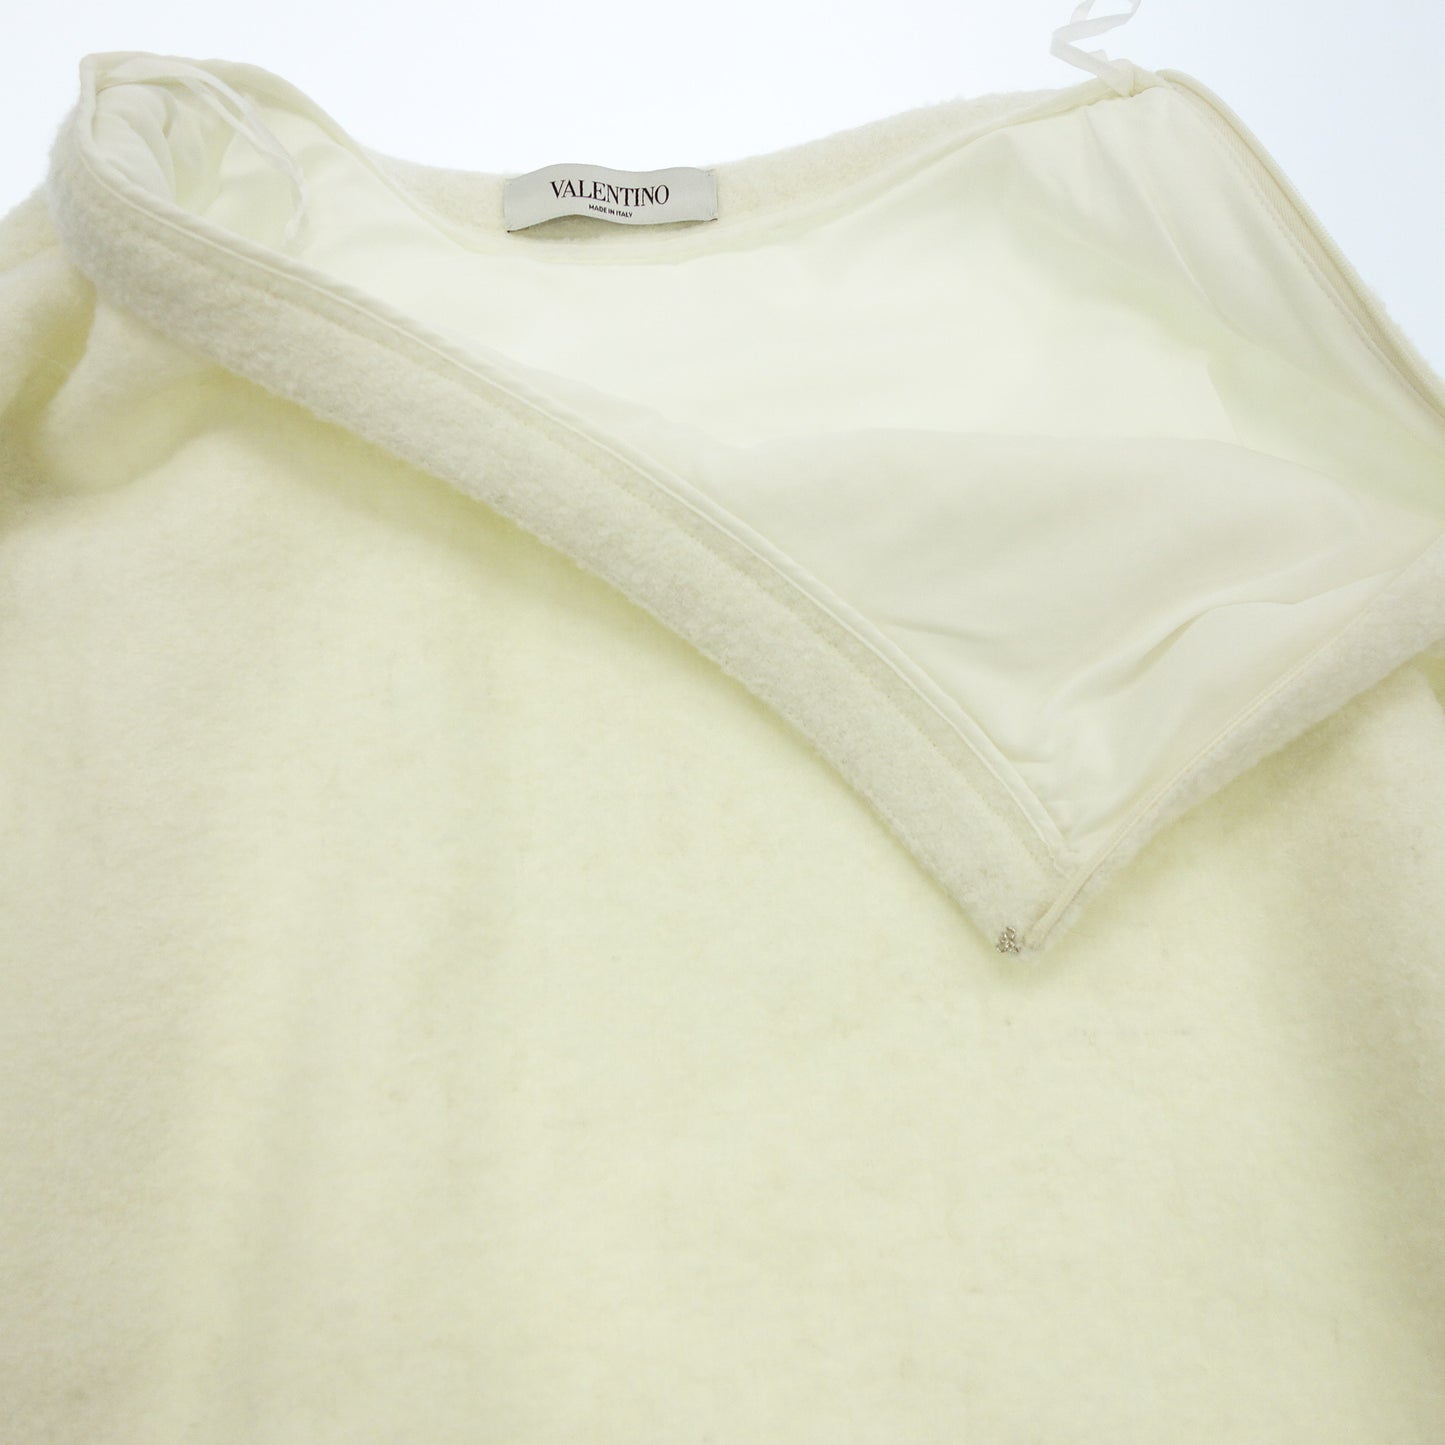 Good condition◆Valentino Skirt Size 38 Women's White VALENTINO [AFB29] 